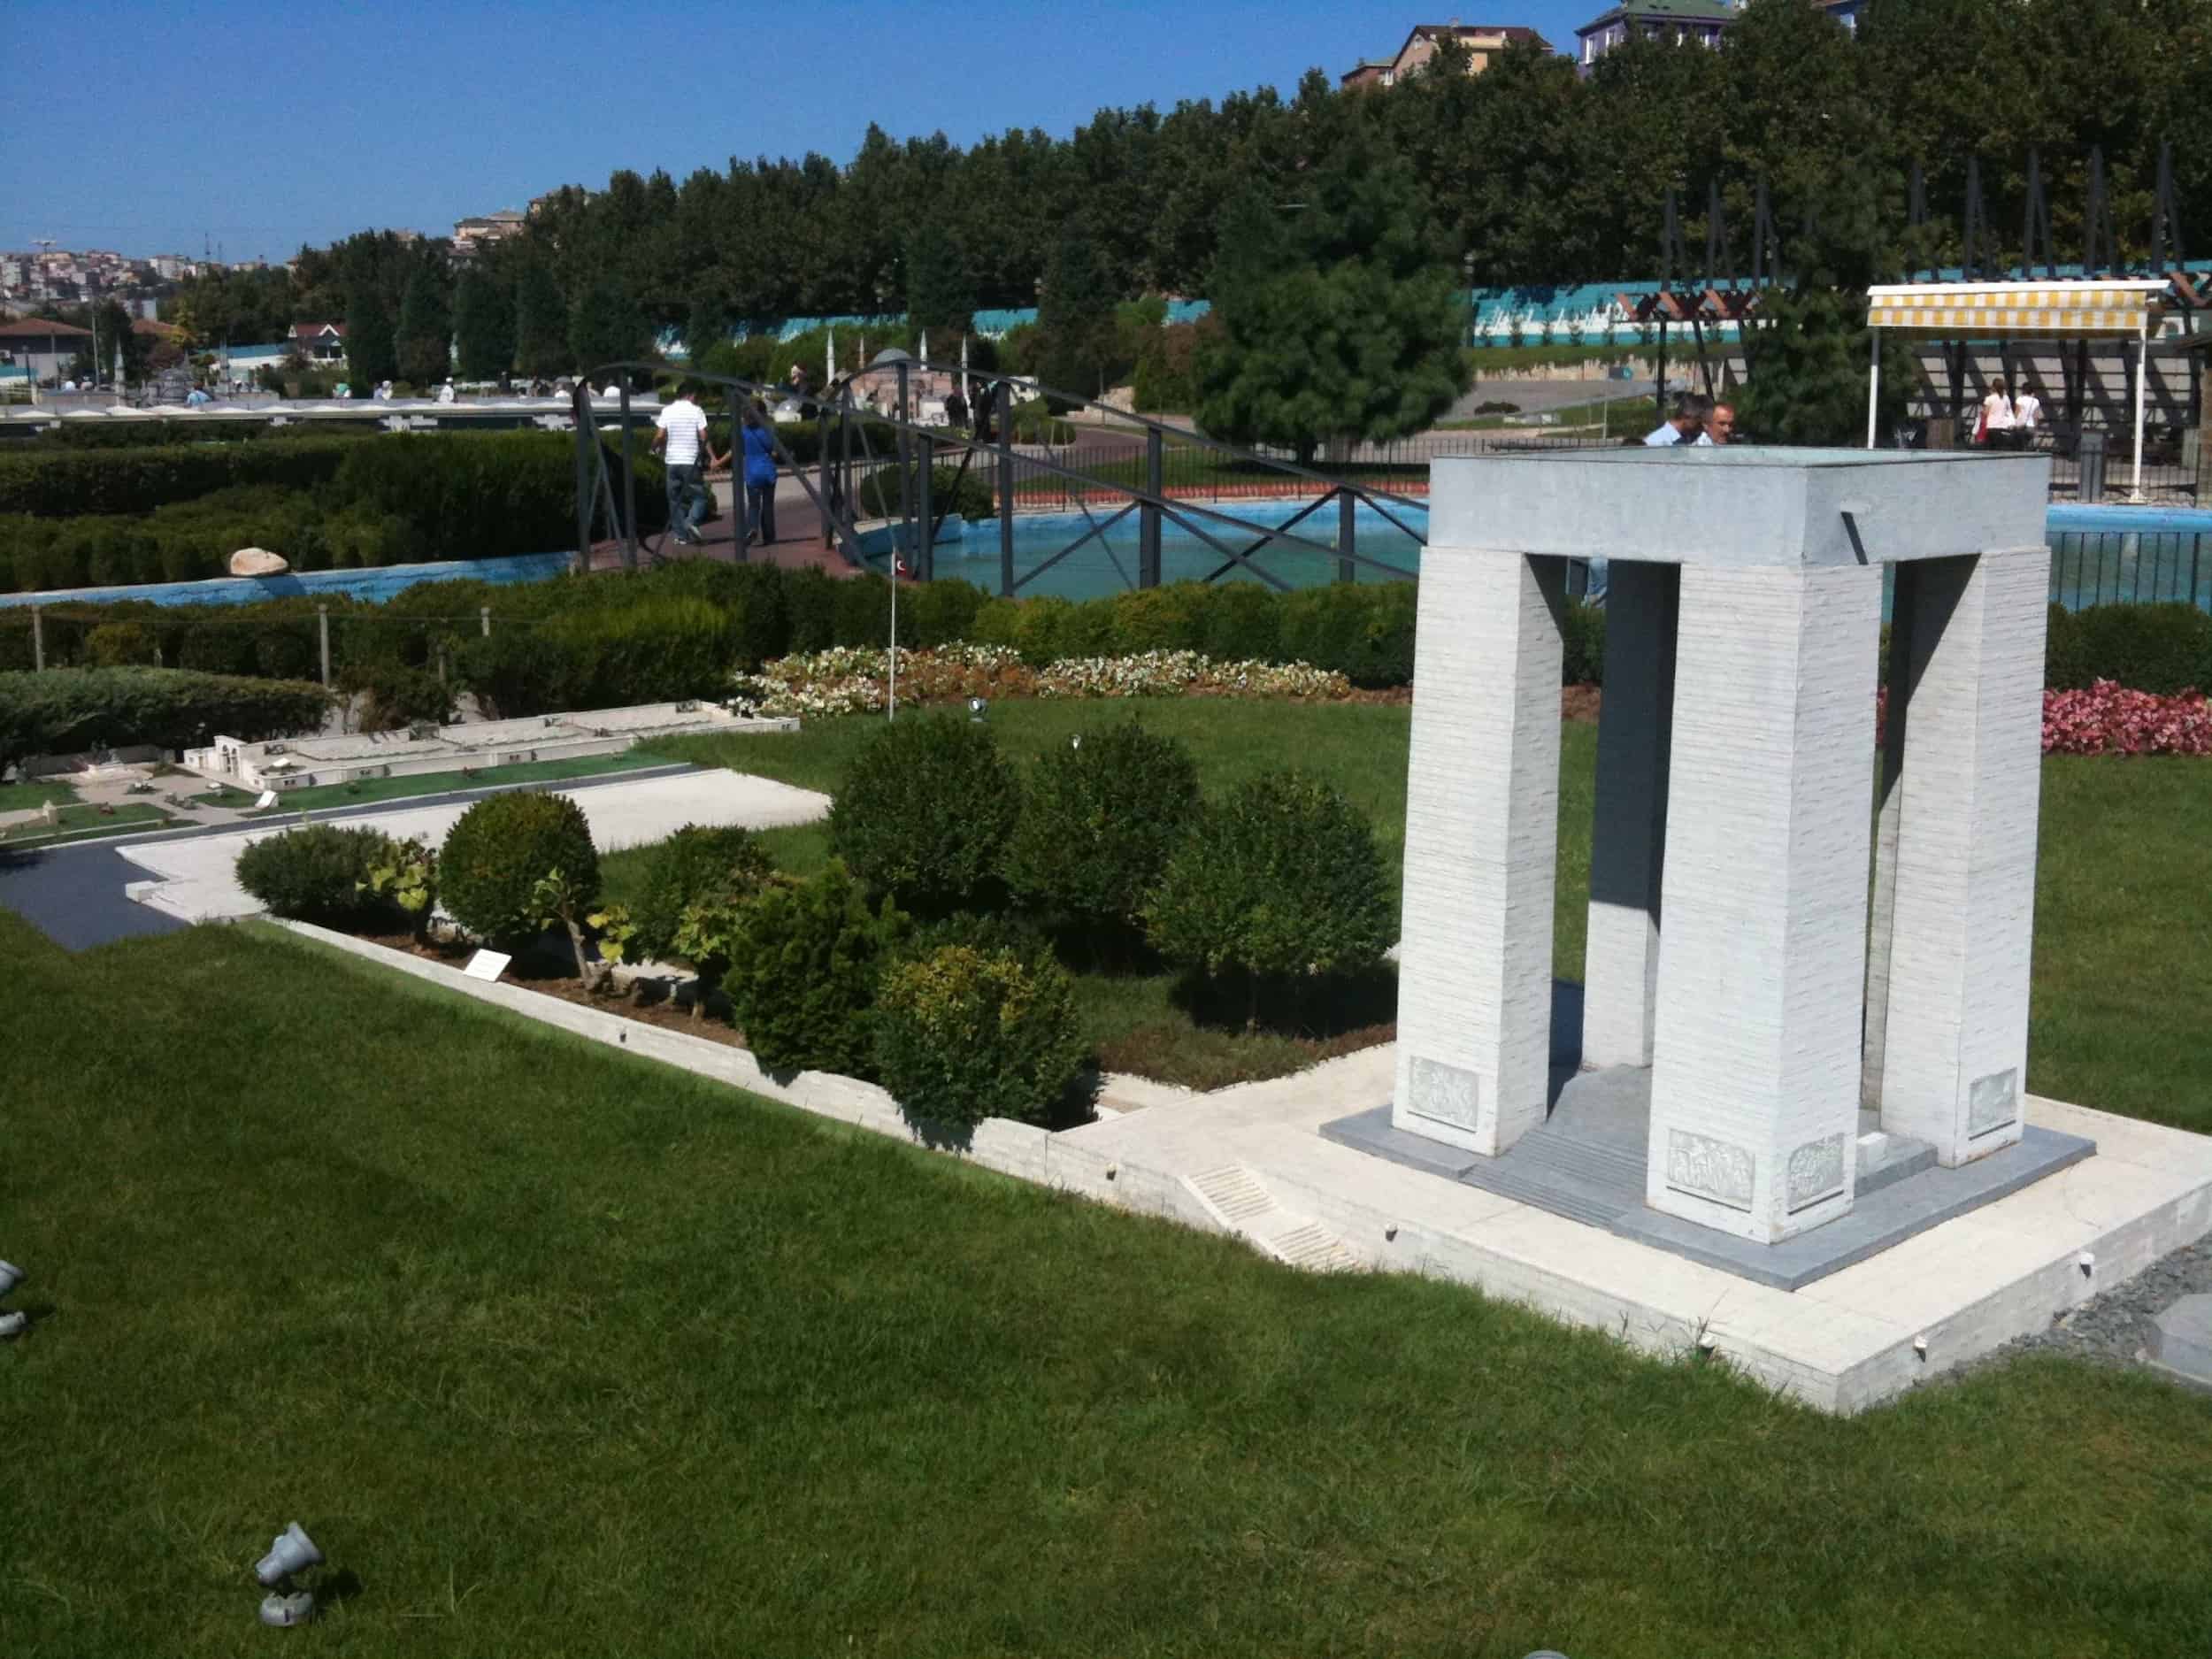 Model of the Çanakkale Martyrs' Memorial, Gallipoli Peninsula, 20th century